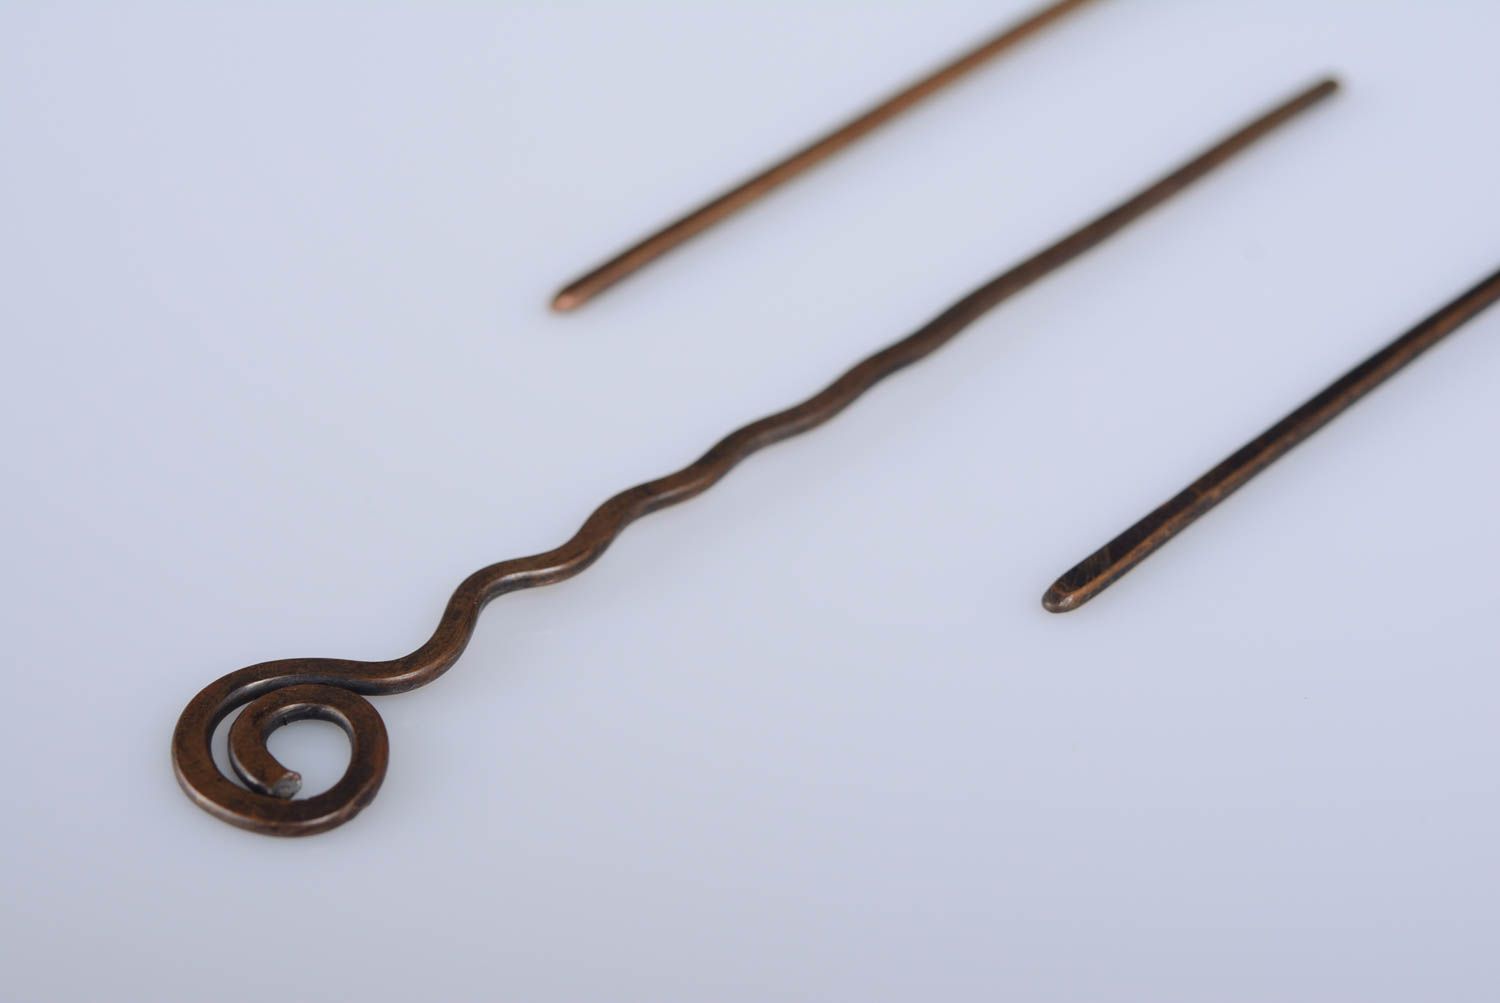 Handmade decorative designer hairpin made of copper using wire wrap technique photo 5